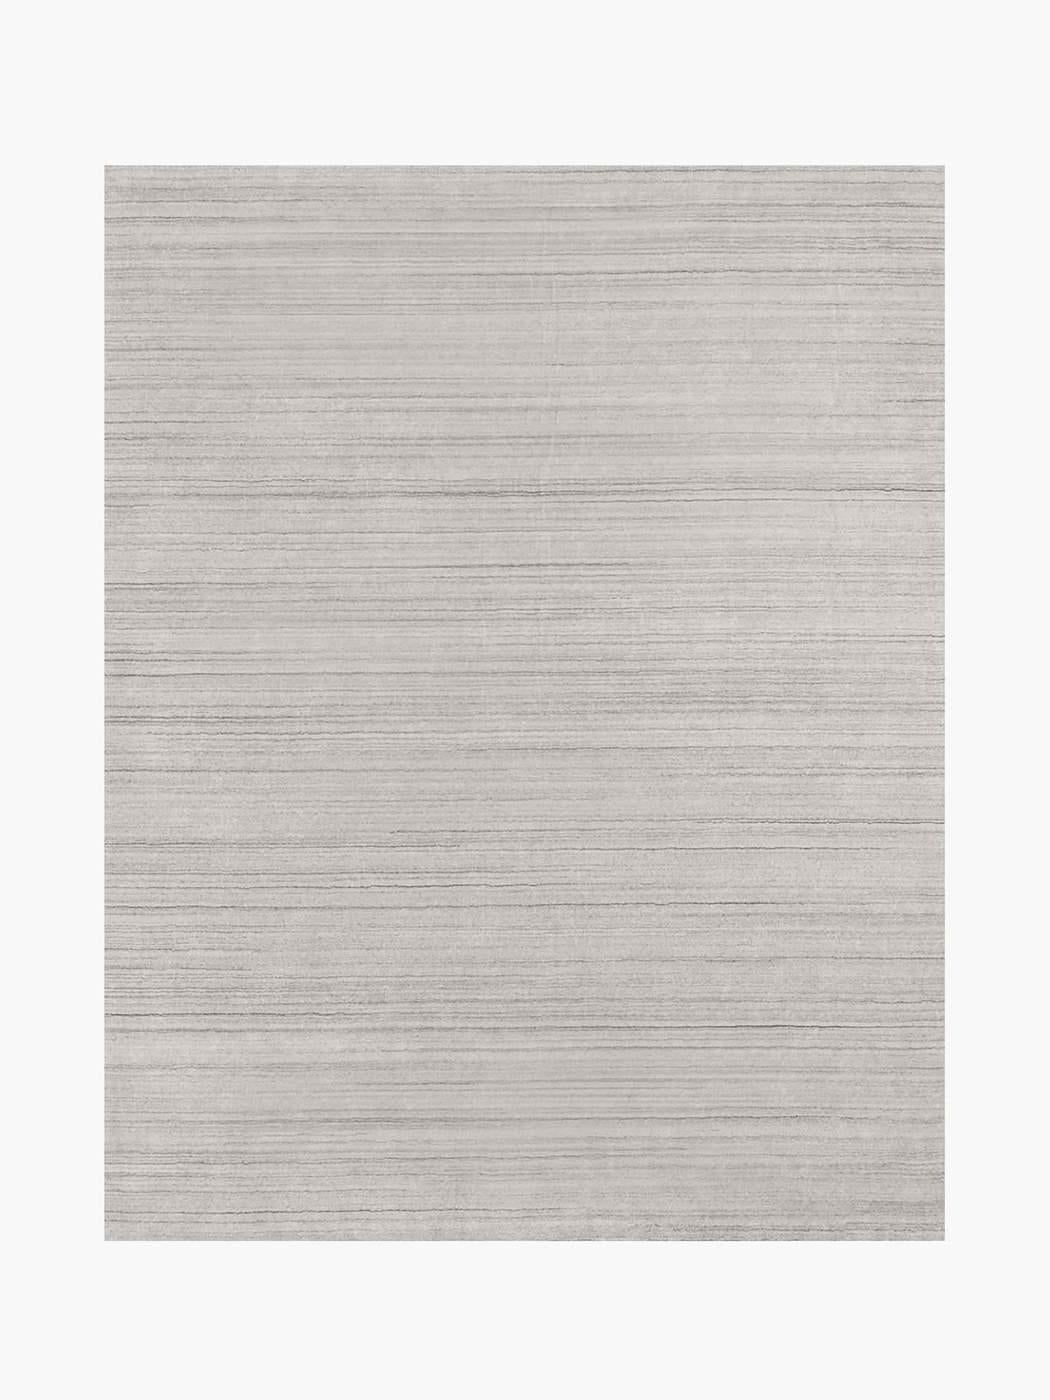 For Sale: Beige (Performance Savilla Sand) Ben Soleimani Performance Savilla Rug– Hand-knotted Medium Pile White 10'x14'